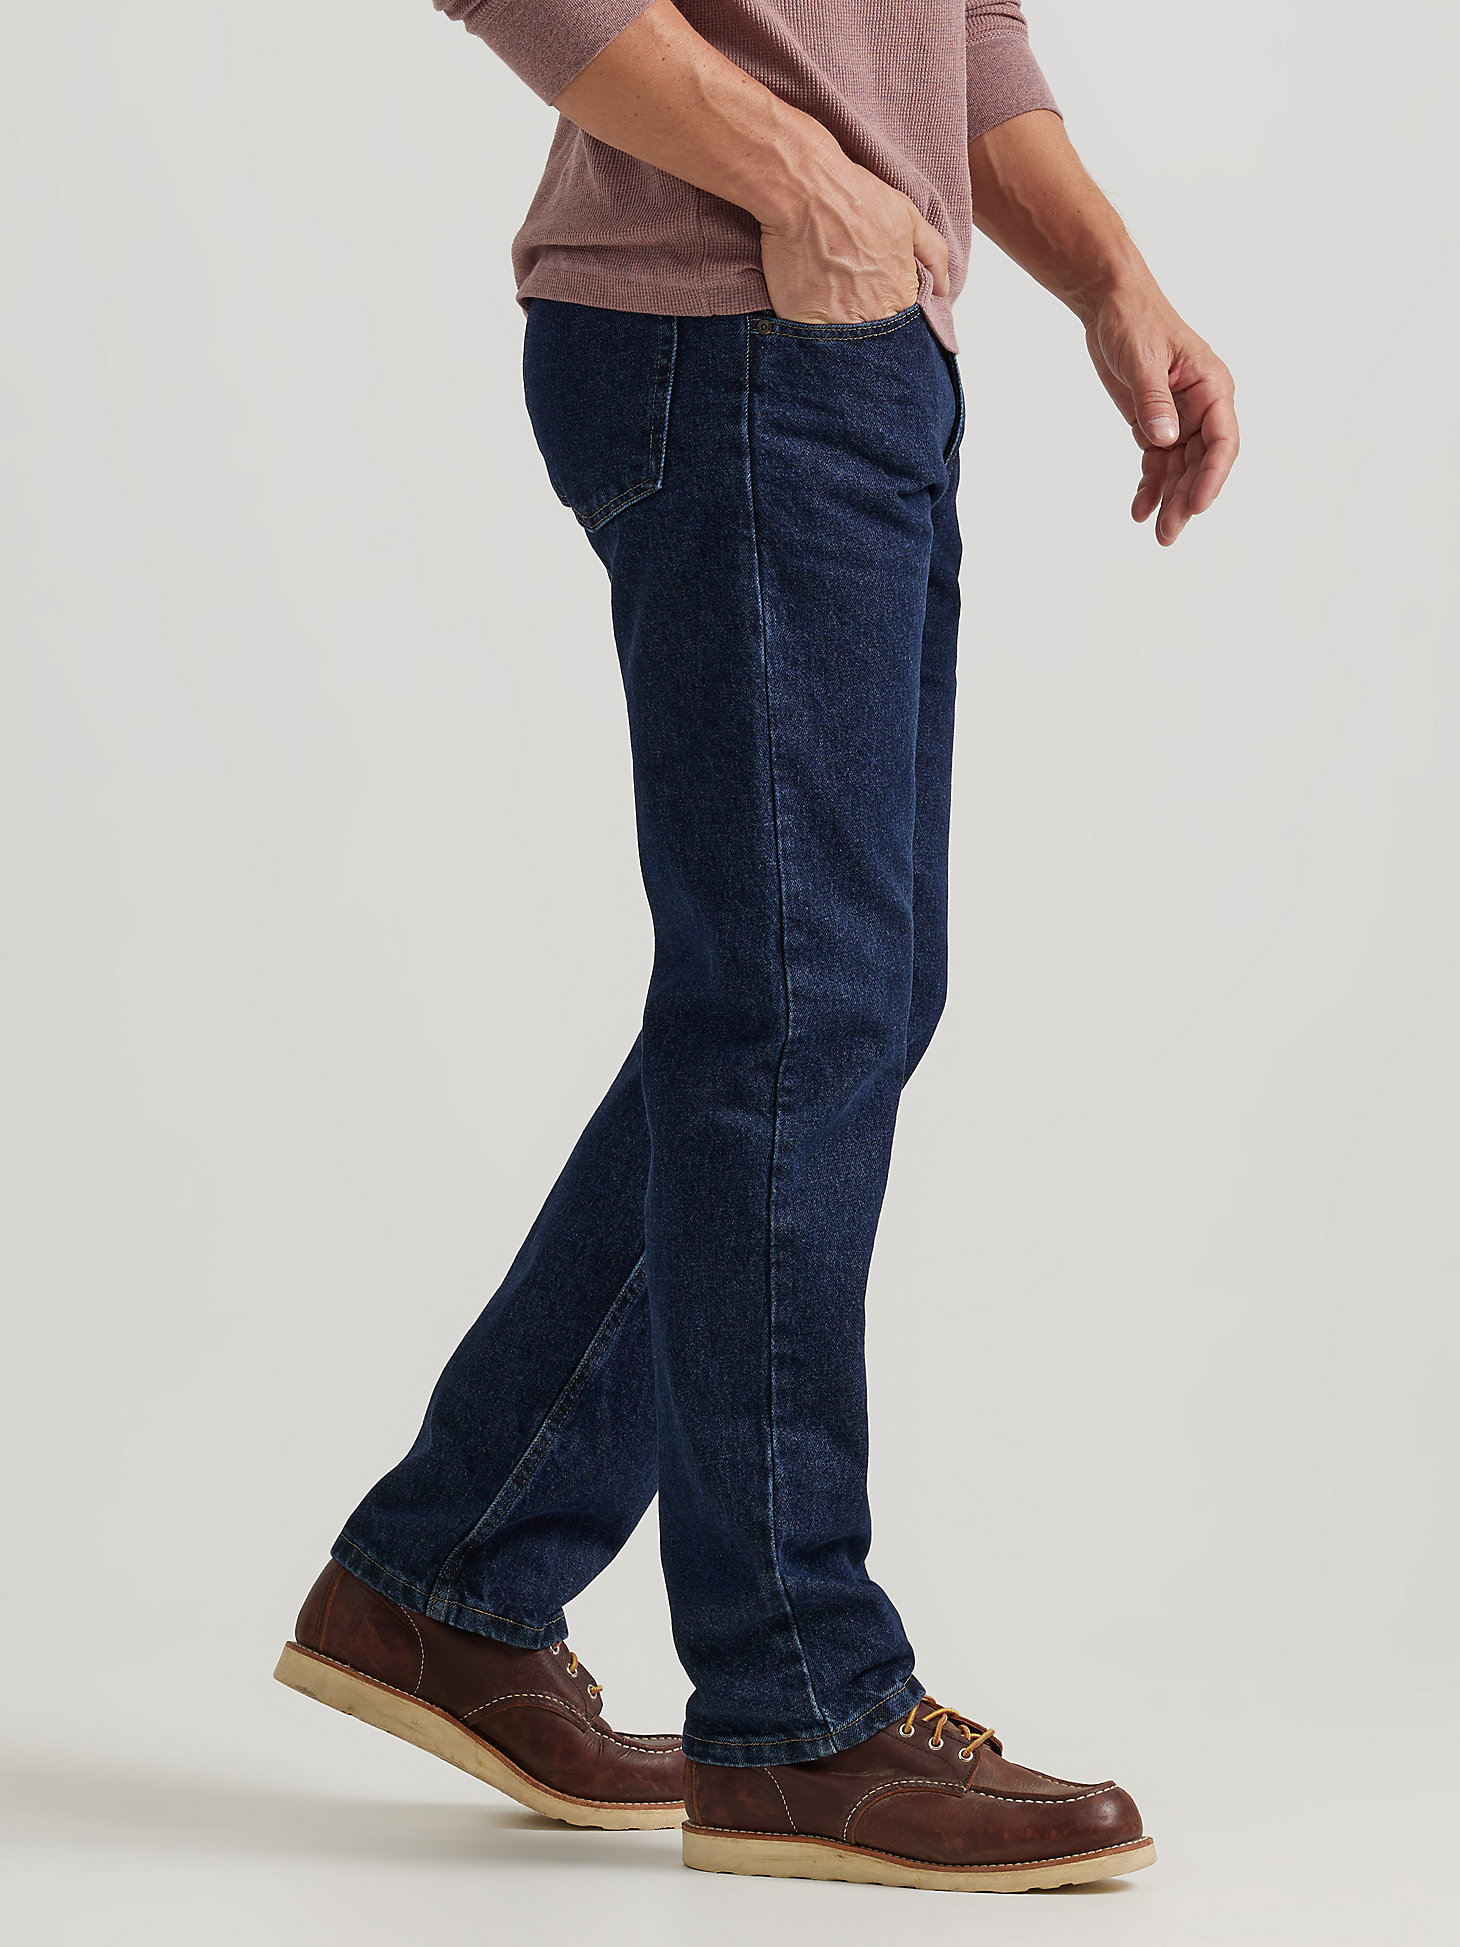 Wrangler® Five Star Premium Denim Regular Fit Jean in Midnight Rinse alternative view 3